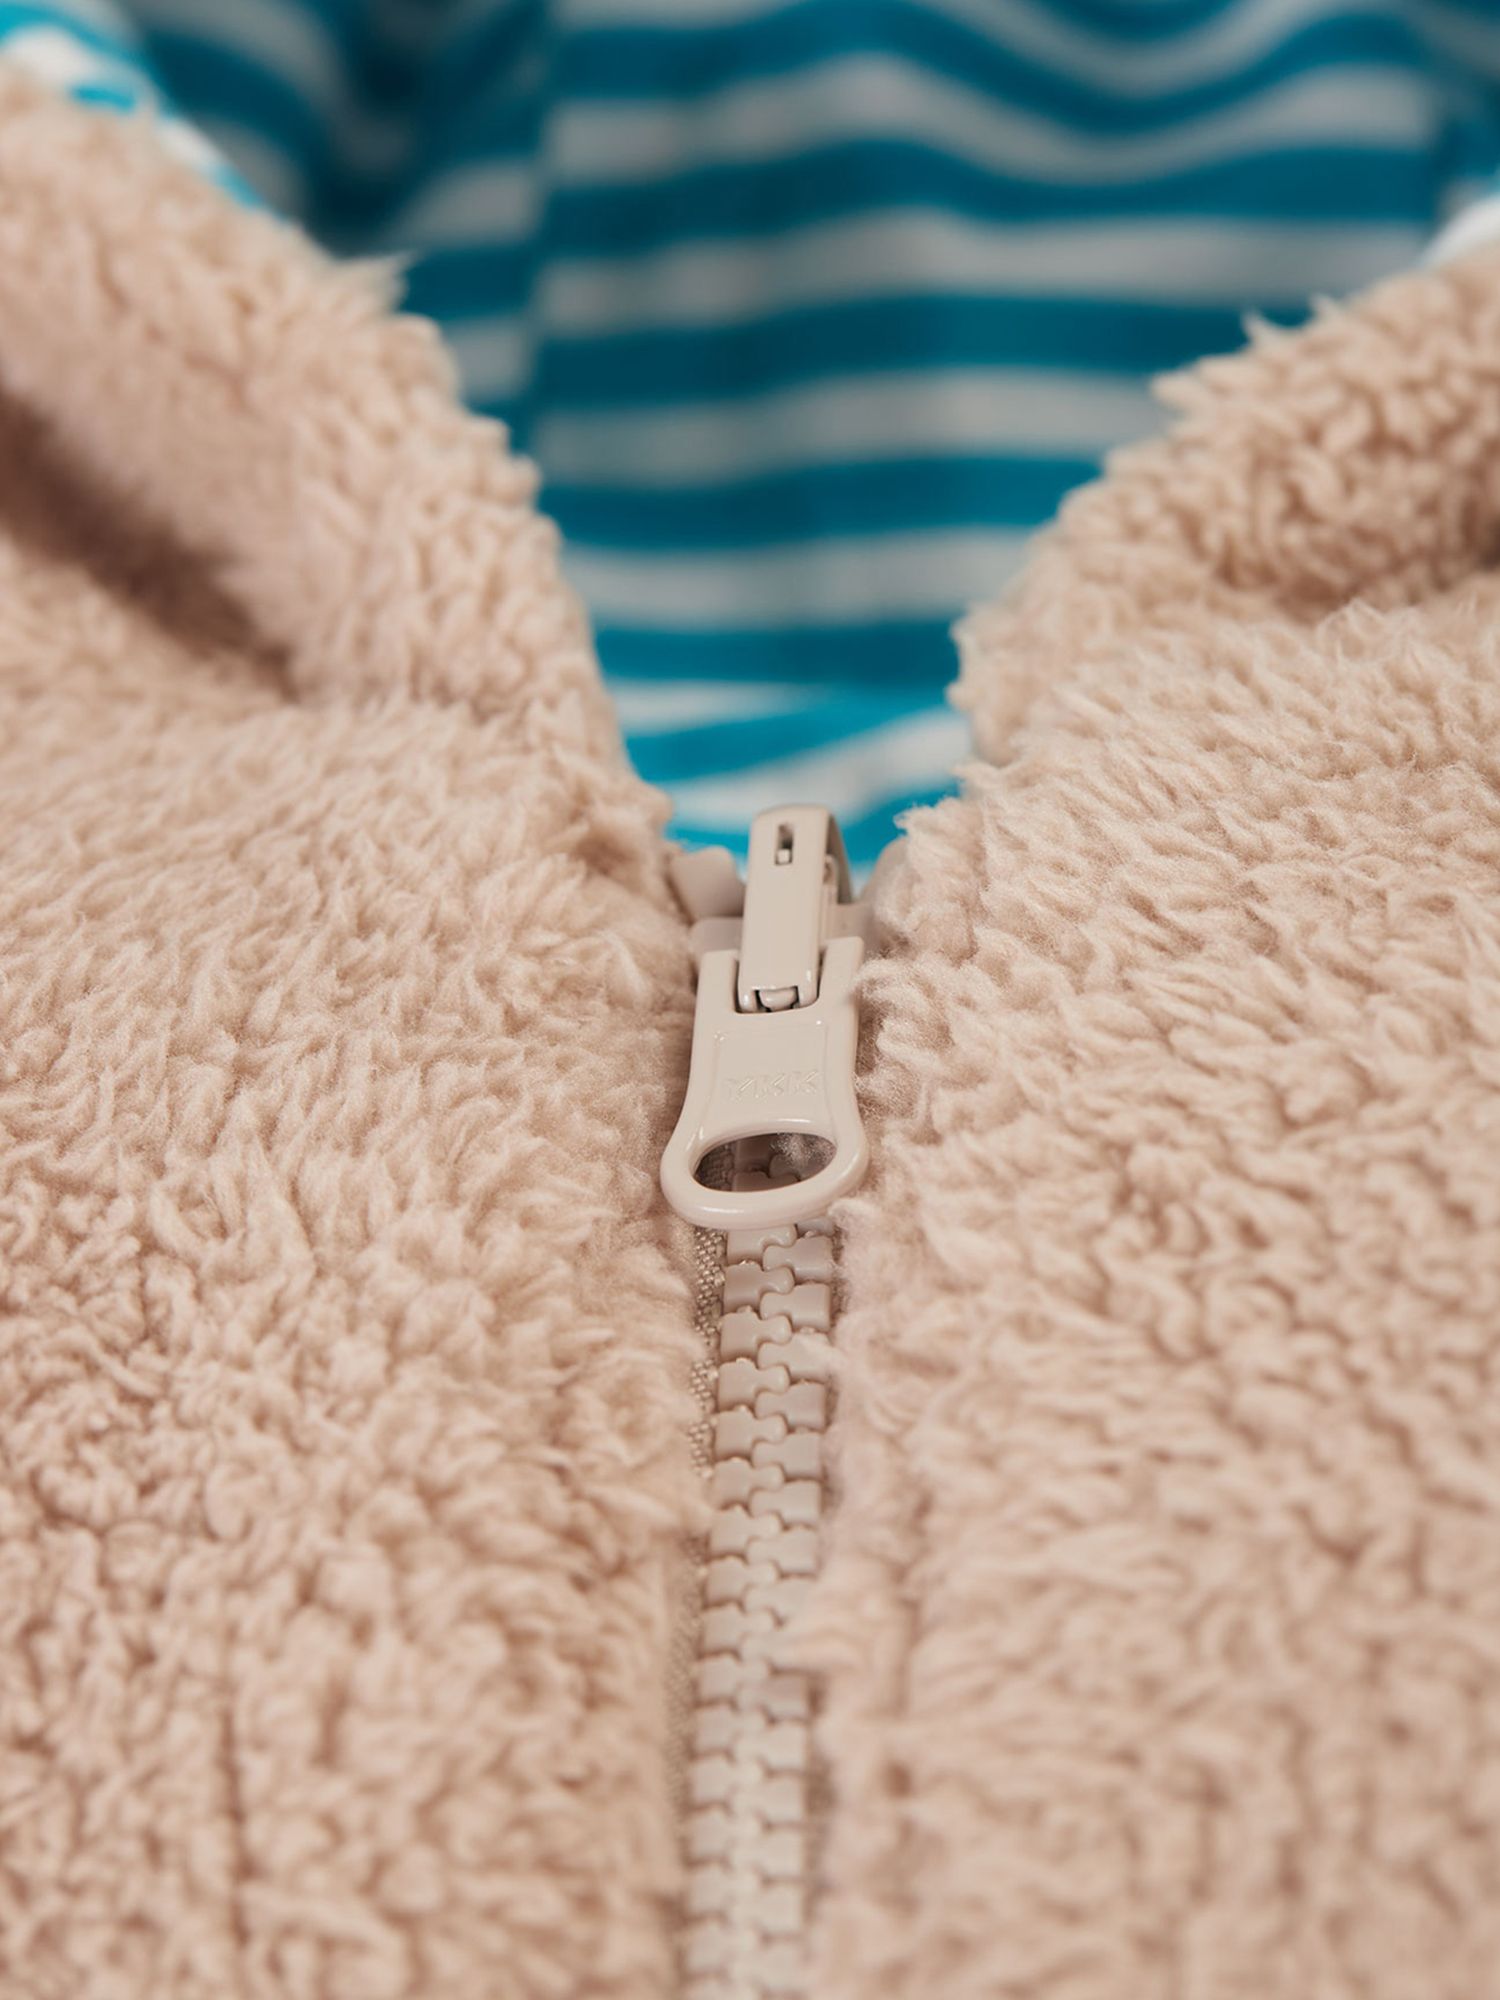 Buy Frugi Baby Ted Fleece Reversible Jacket, Multi Online at johnlewis.com